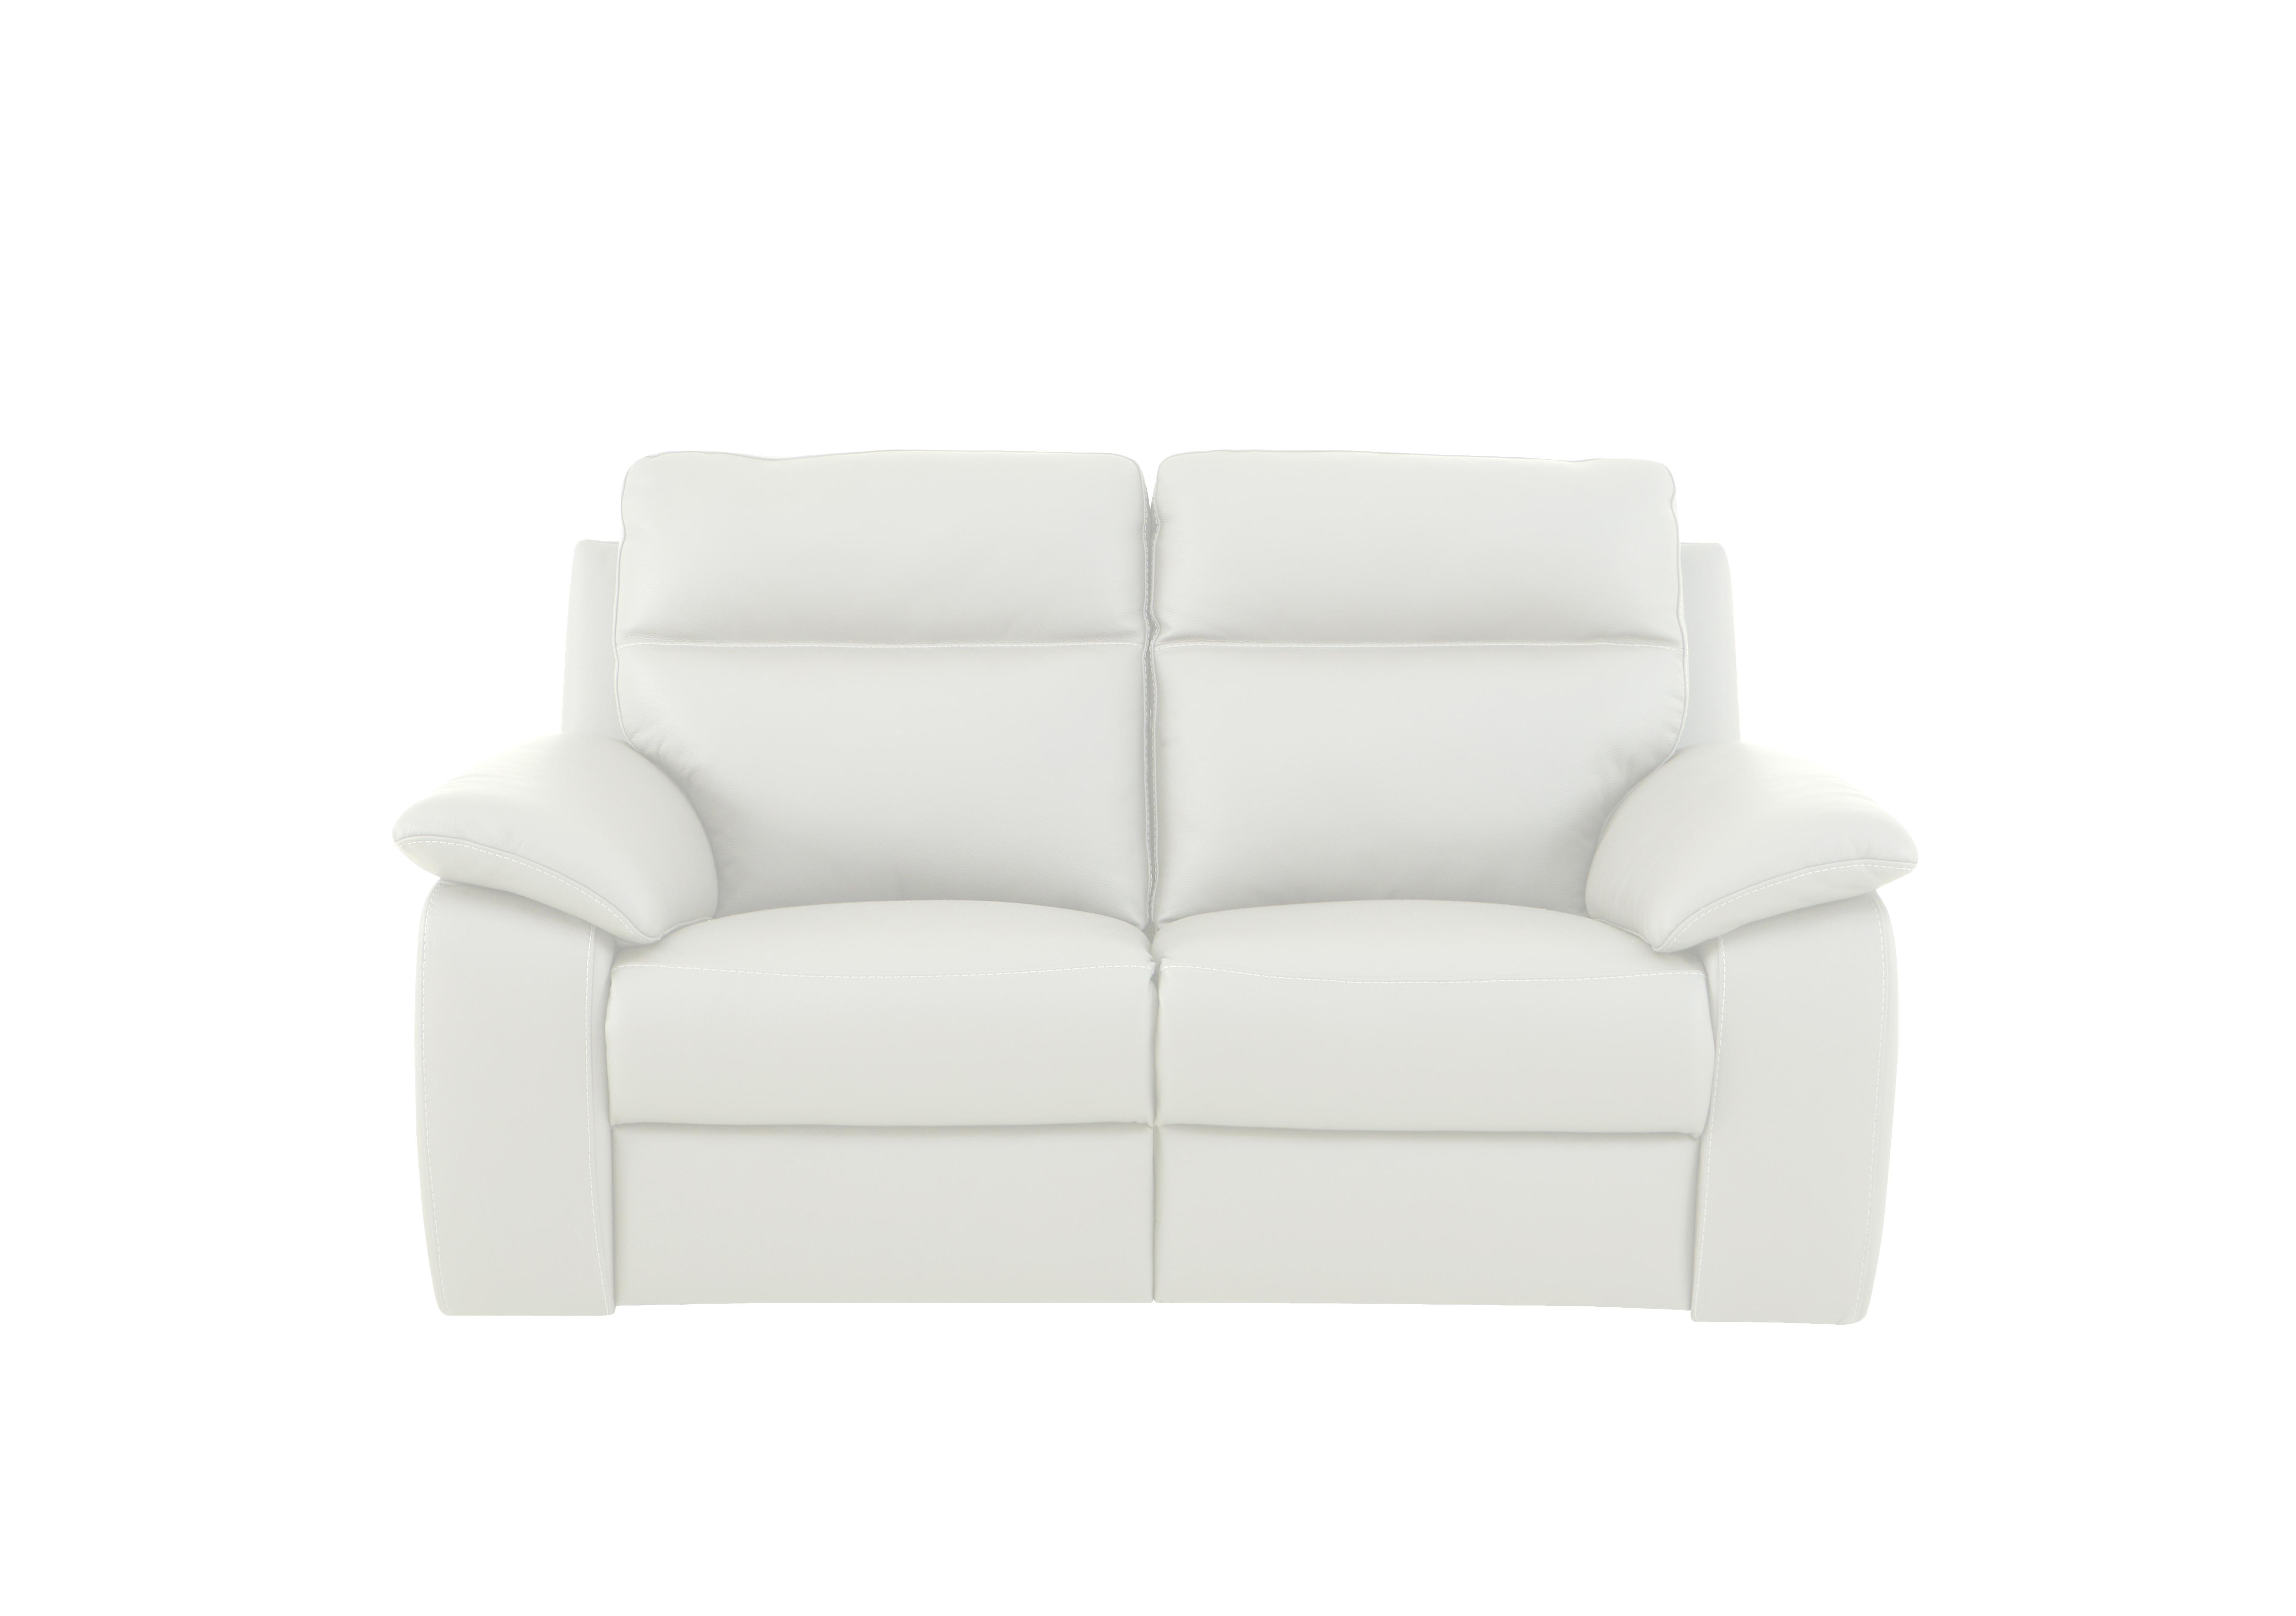 Pepino 2 Seater Leather Sofa in 370 Torello Bianco Puro on Furniture Village